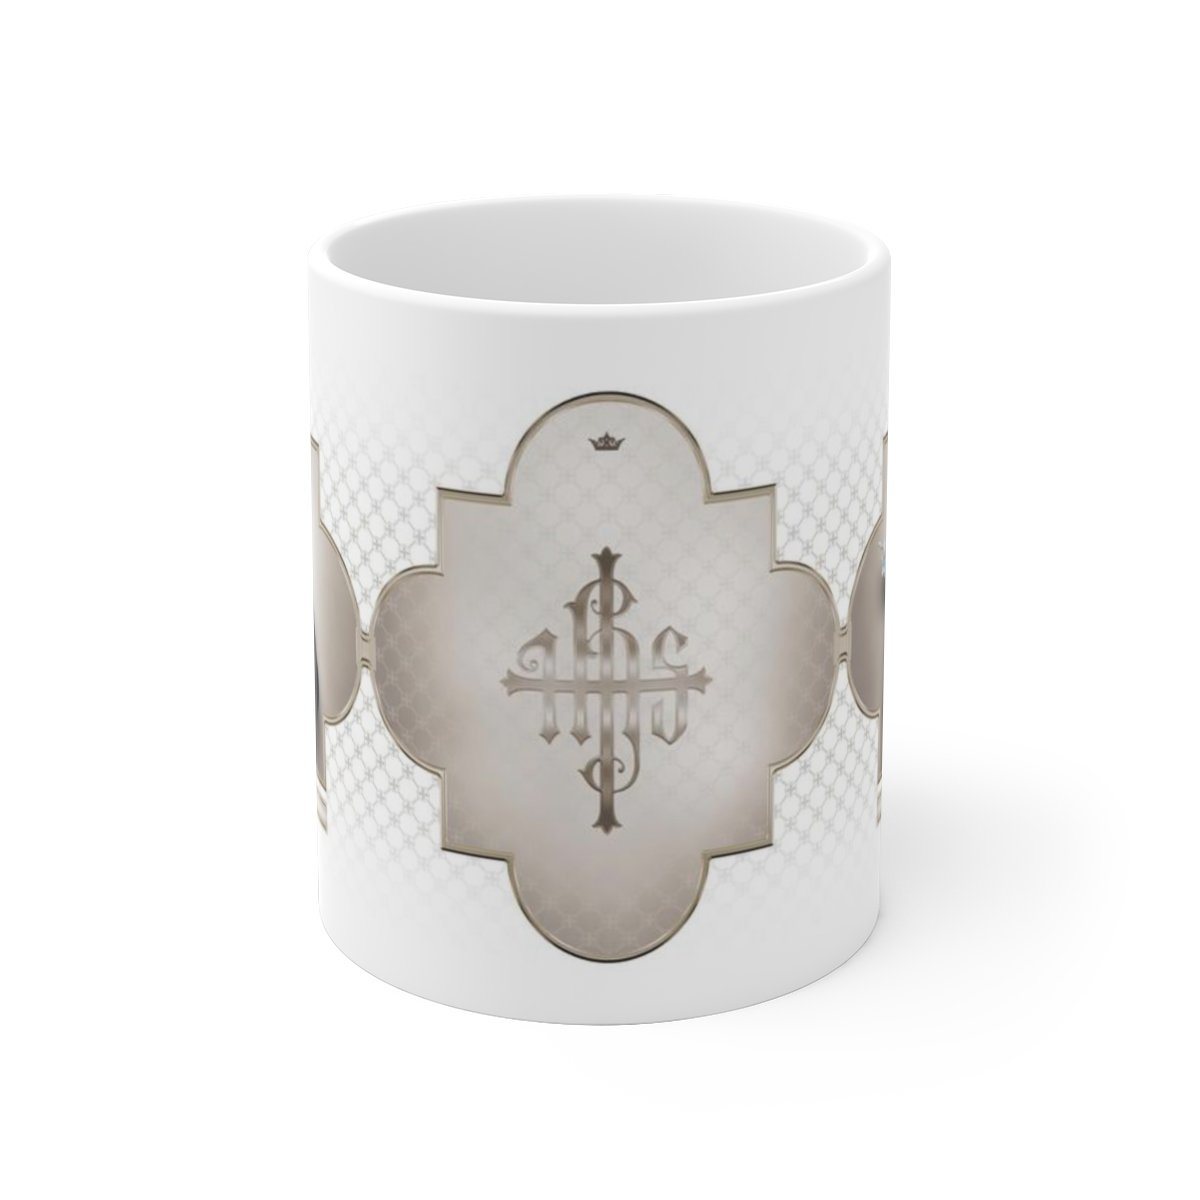 St. Catherine of Siena Ceramic Mug - VENXARA®